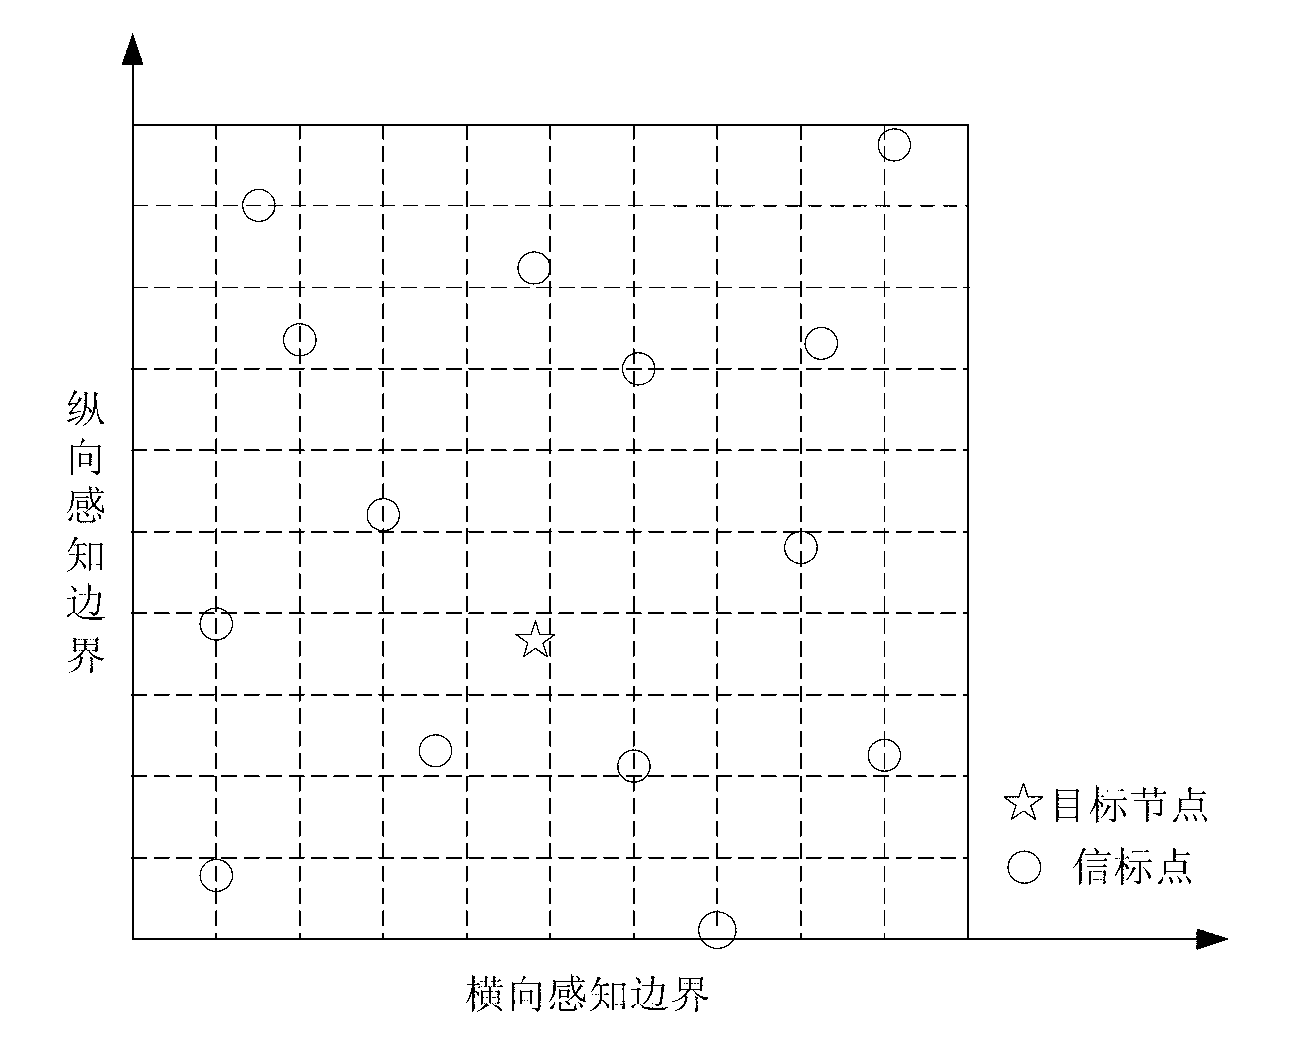 Sparse node positioning algorithm